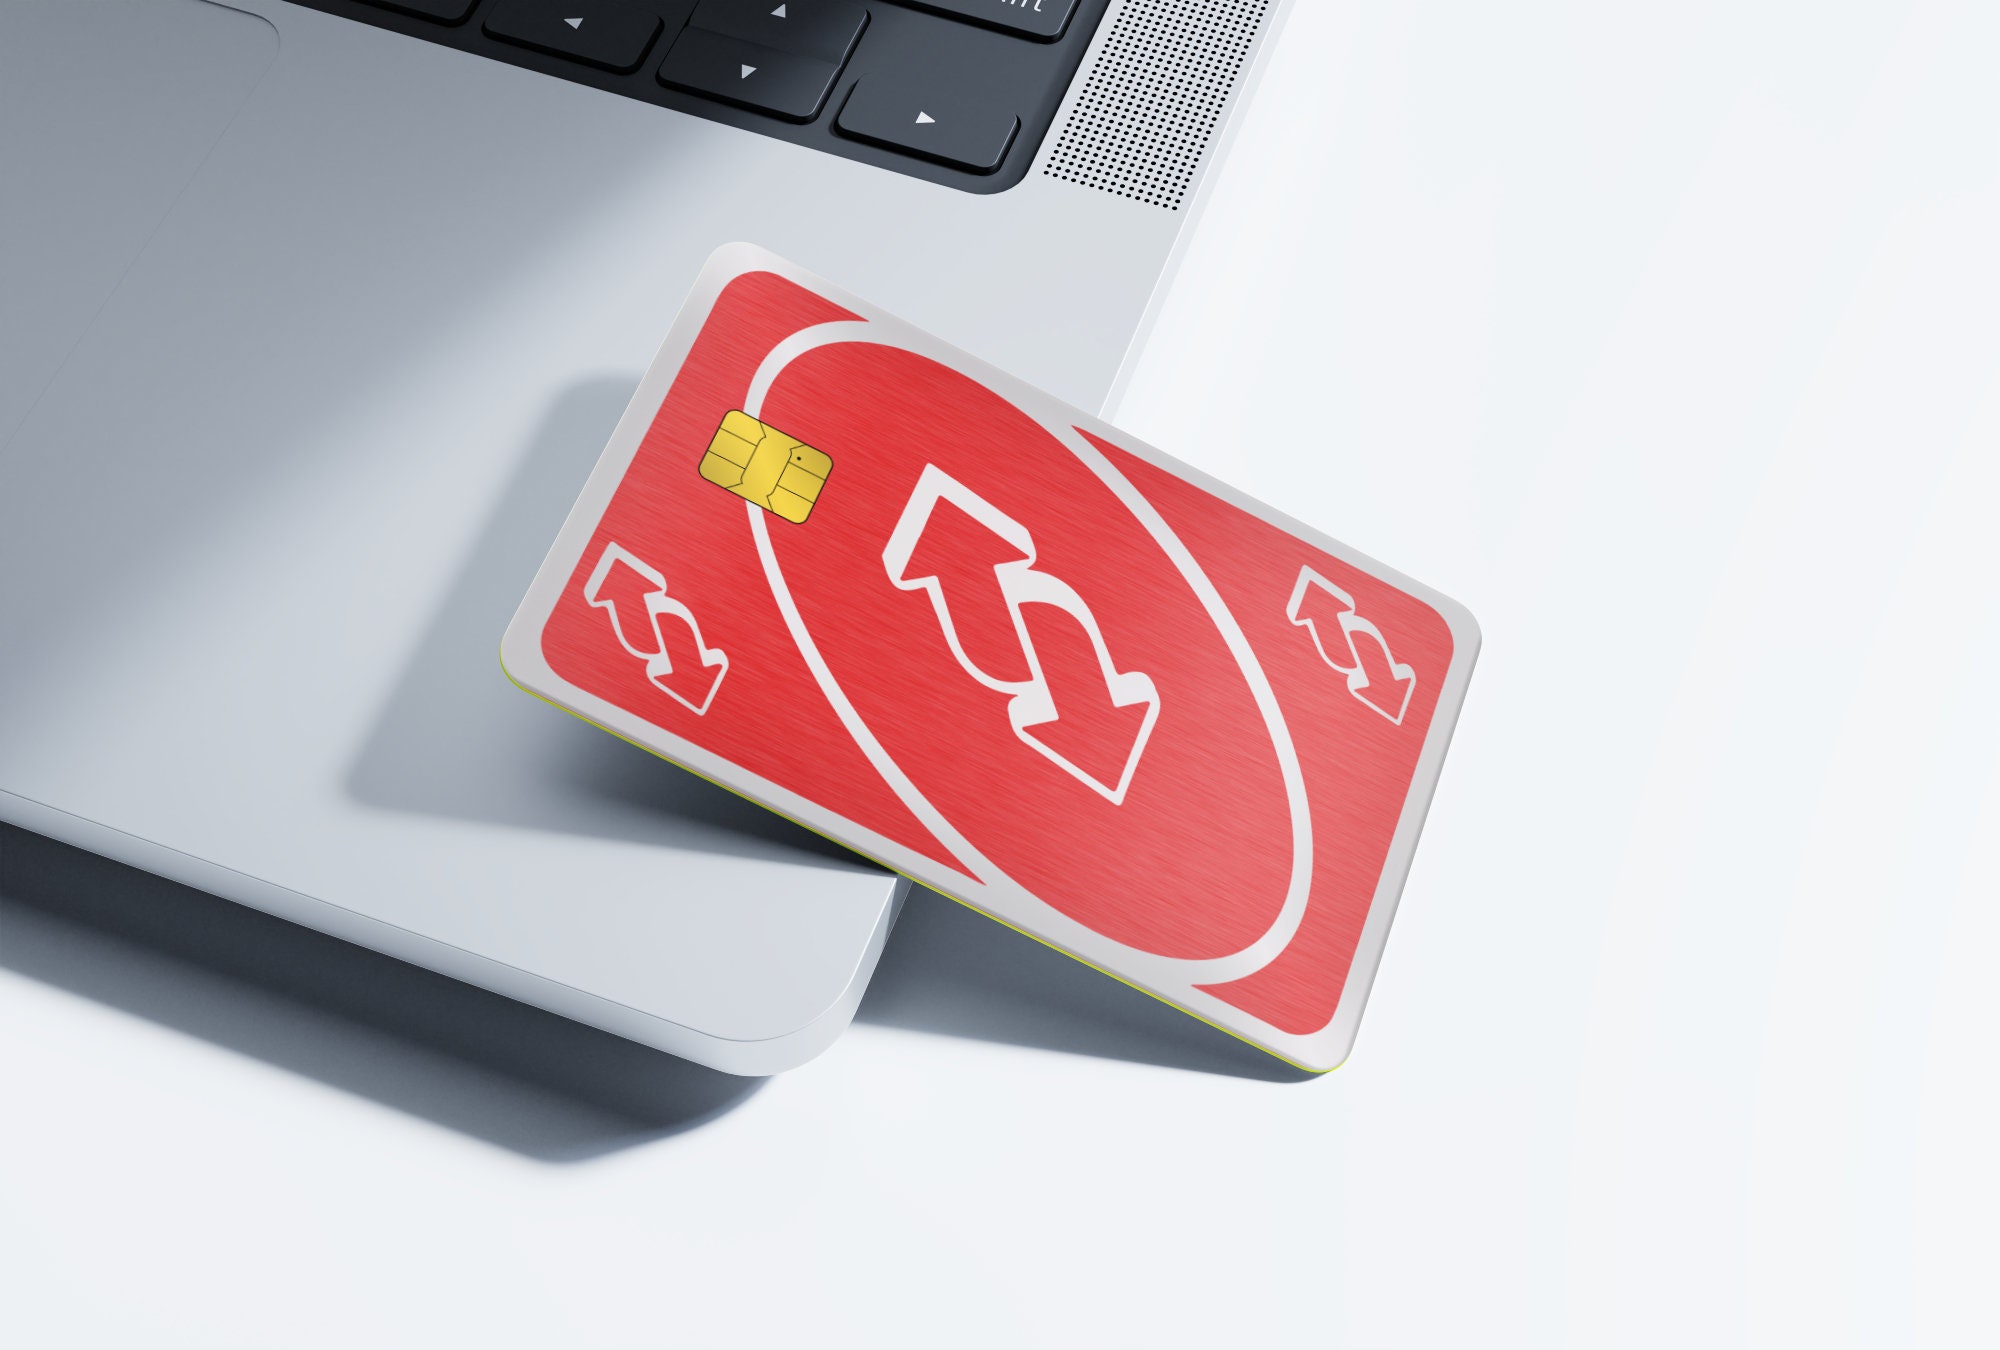 Introducing the Reverse Uno metal credit card! This sleek, minimal de